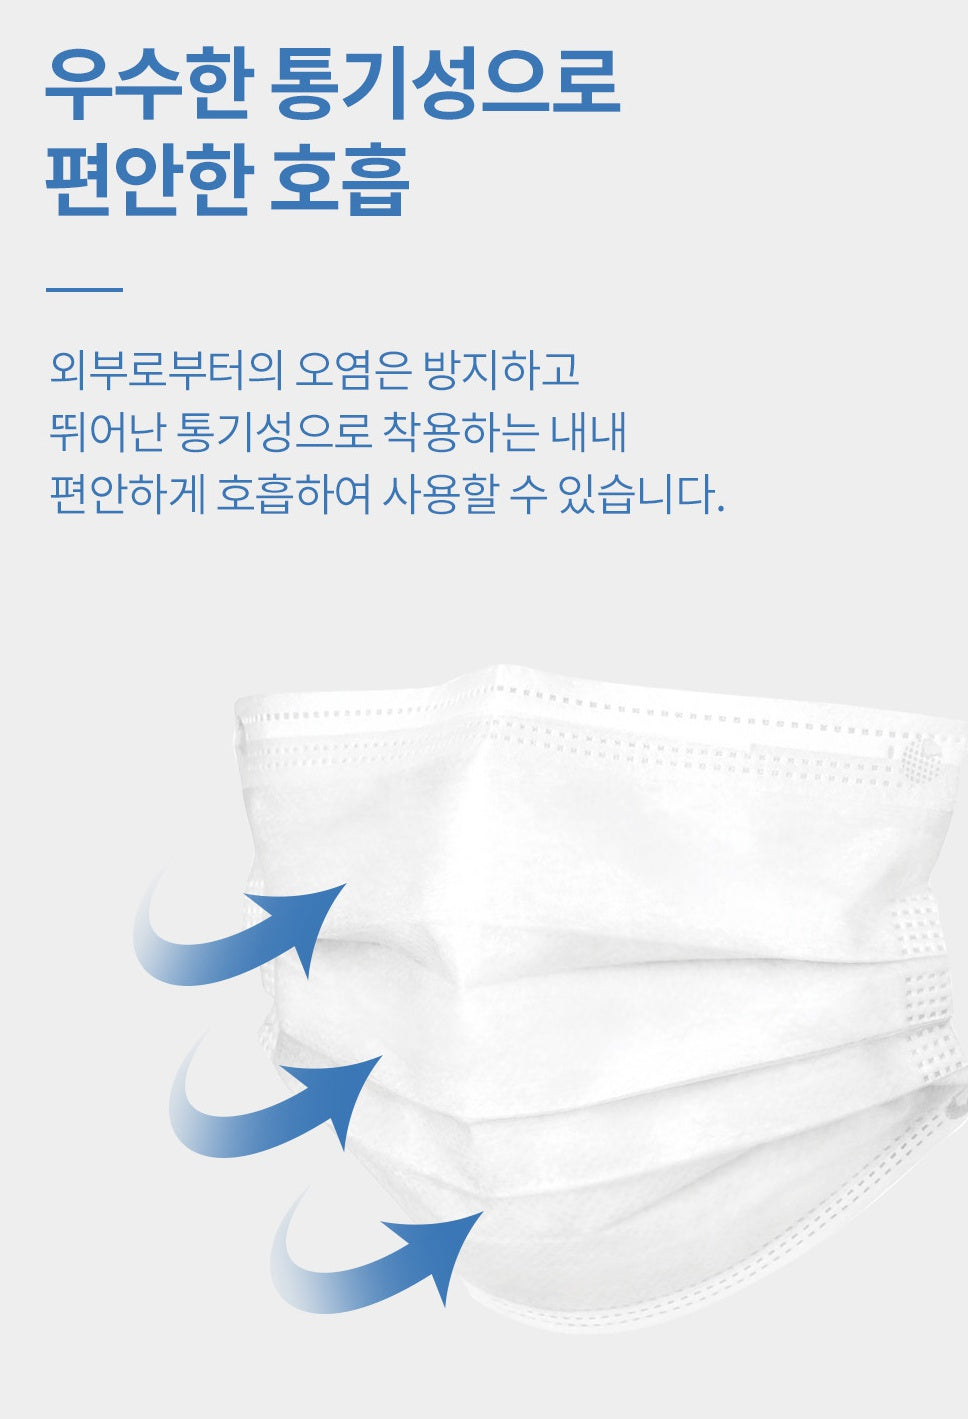 SAYEE Adults Disposable Face Masks Dental Earloop 3 Ply Earloop Korea